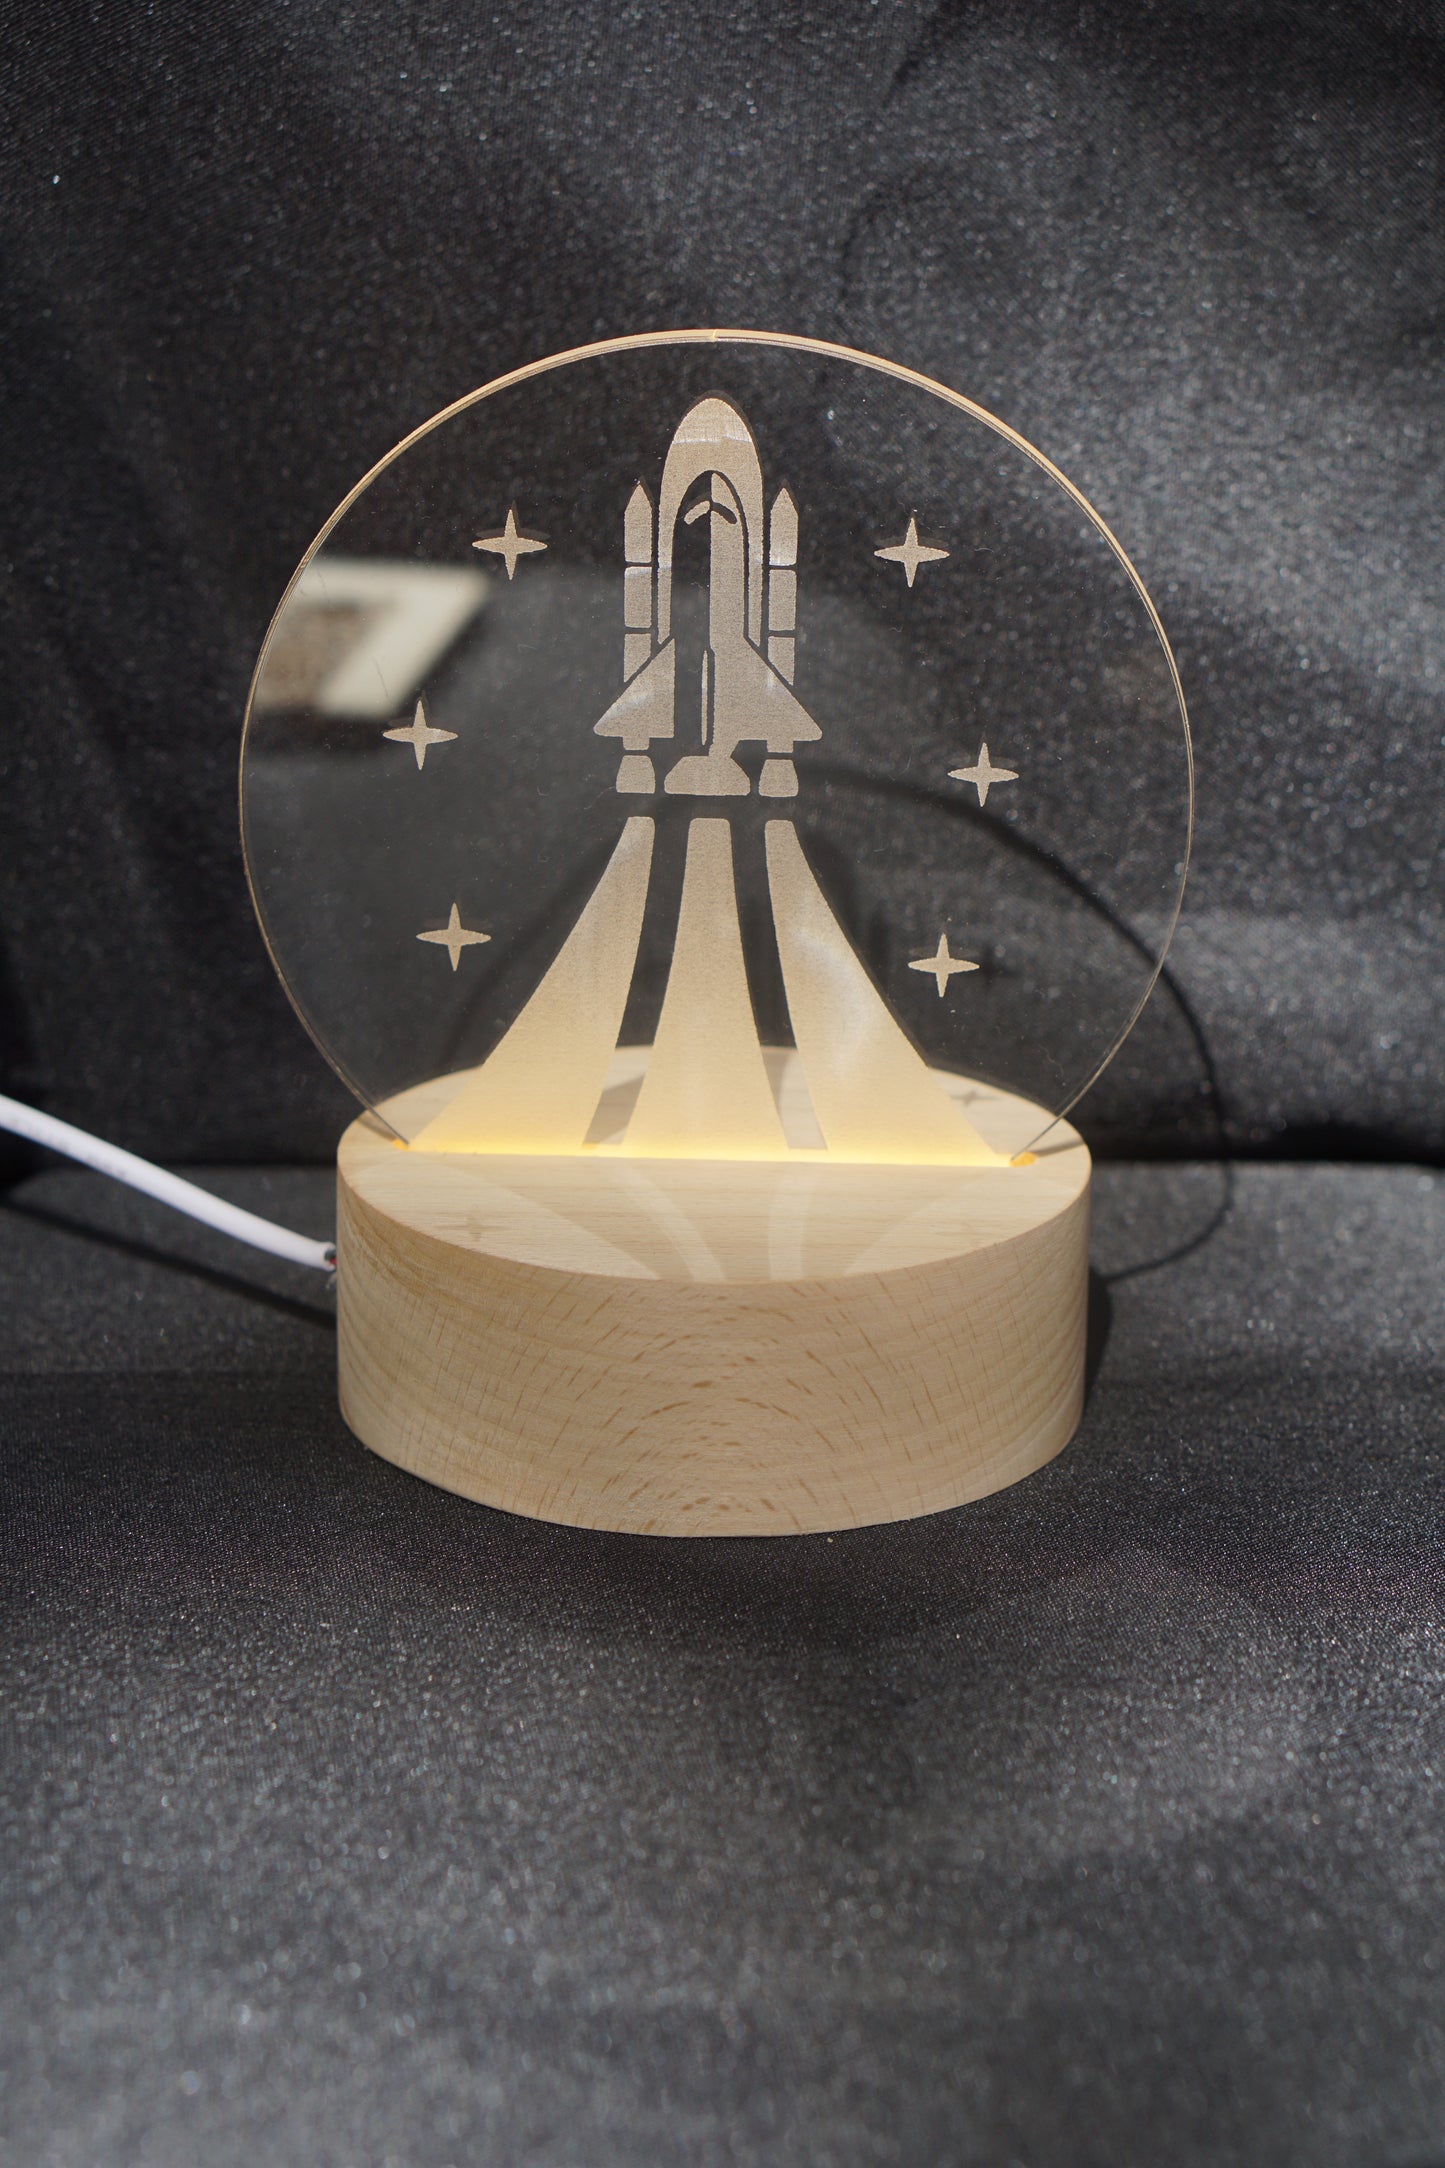 Holo Lamp: Space Shuttle